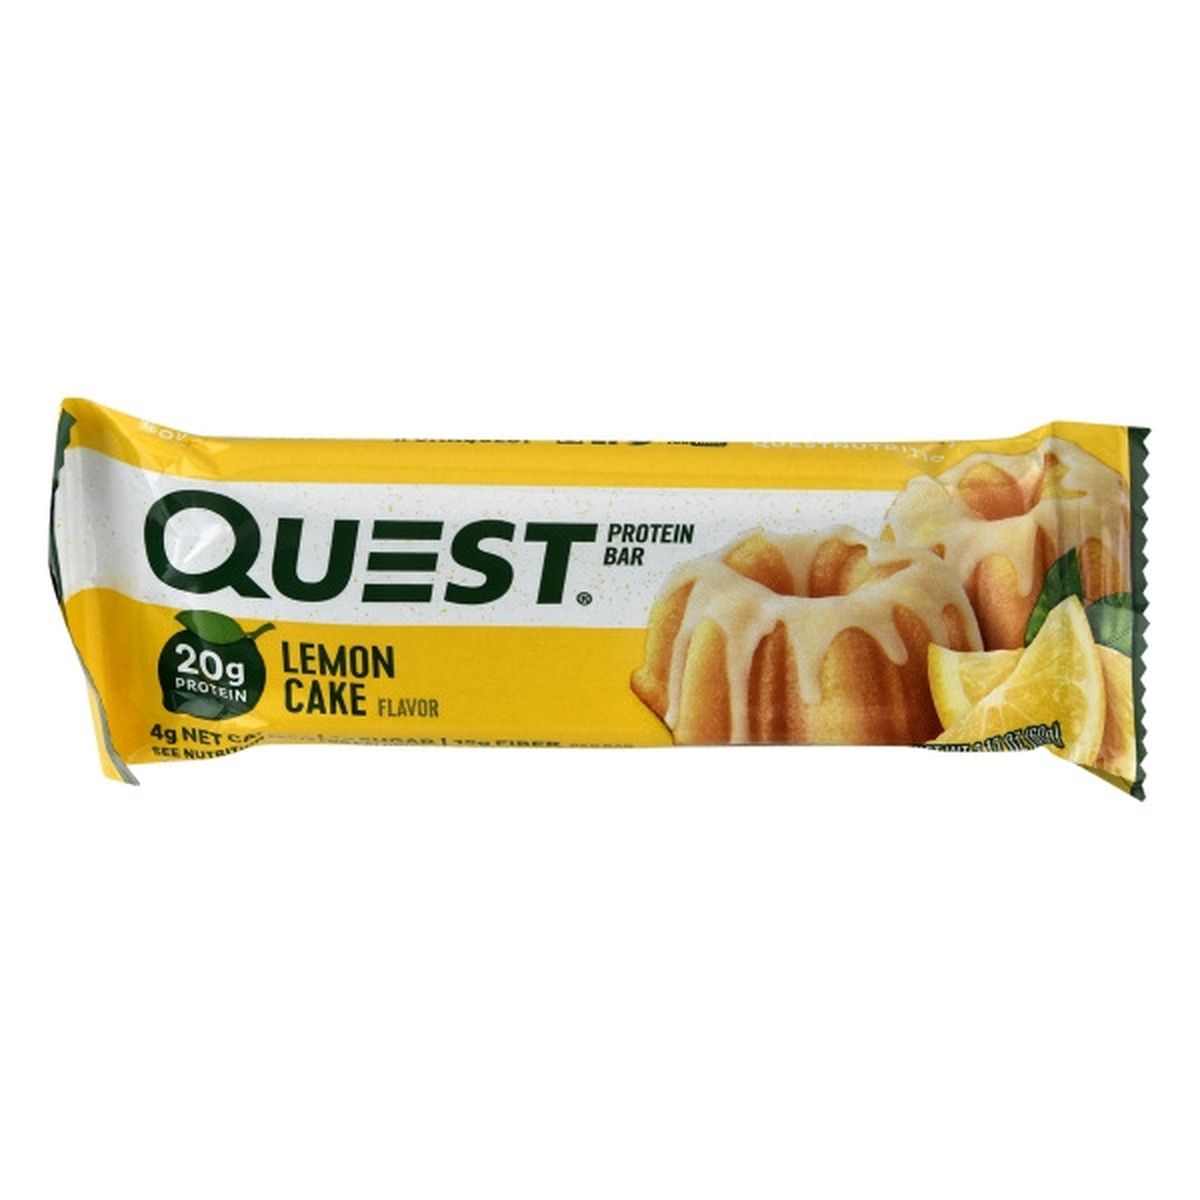 Calories in Quest Protein Bar, Lemon Cake Flavor